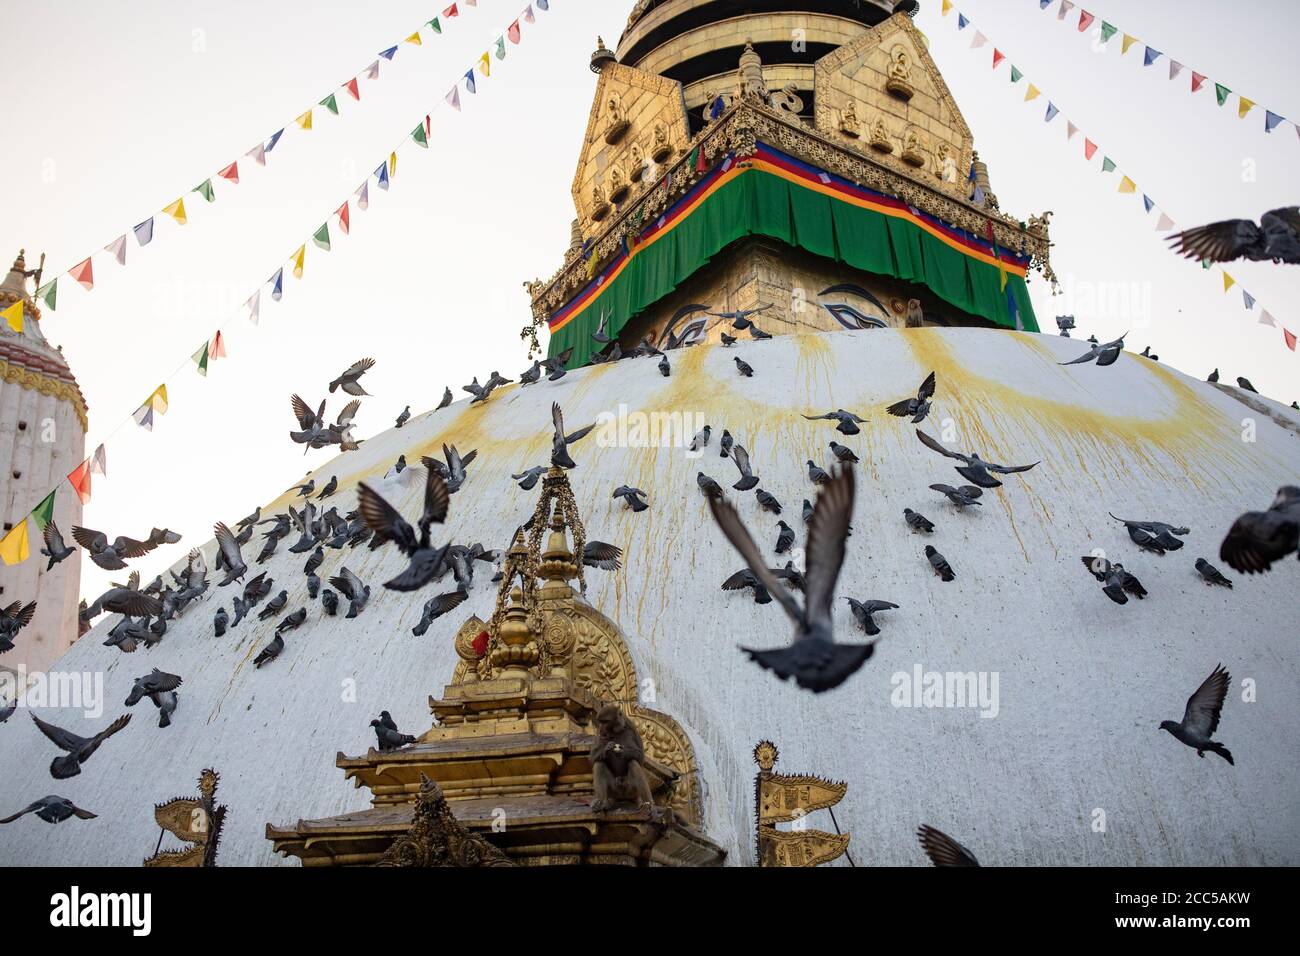 Tauben flattern um die Kuppel des Swayambhunath Stupa in Kathmandu, Nepal. Stockfoto